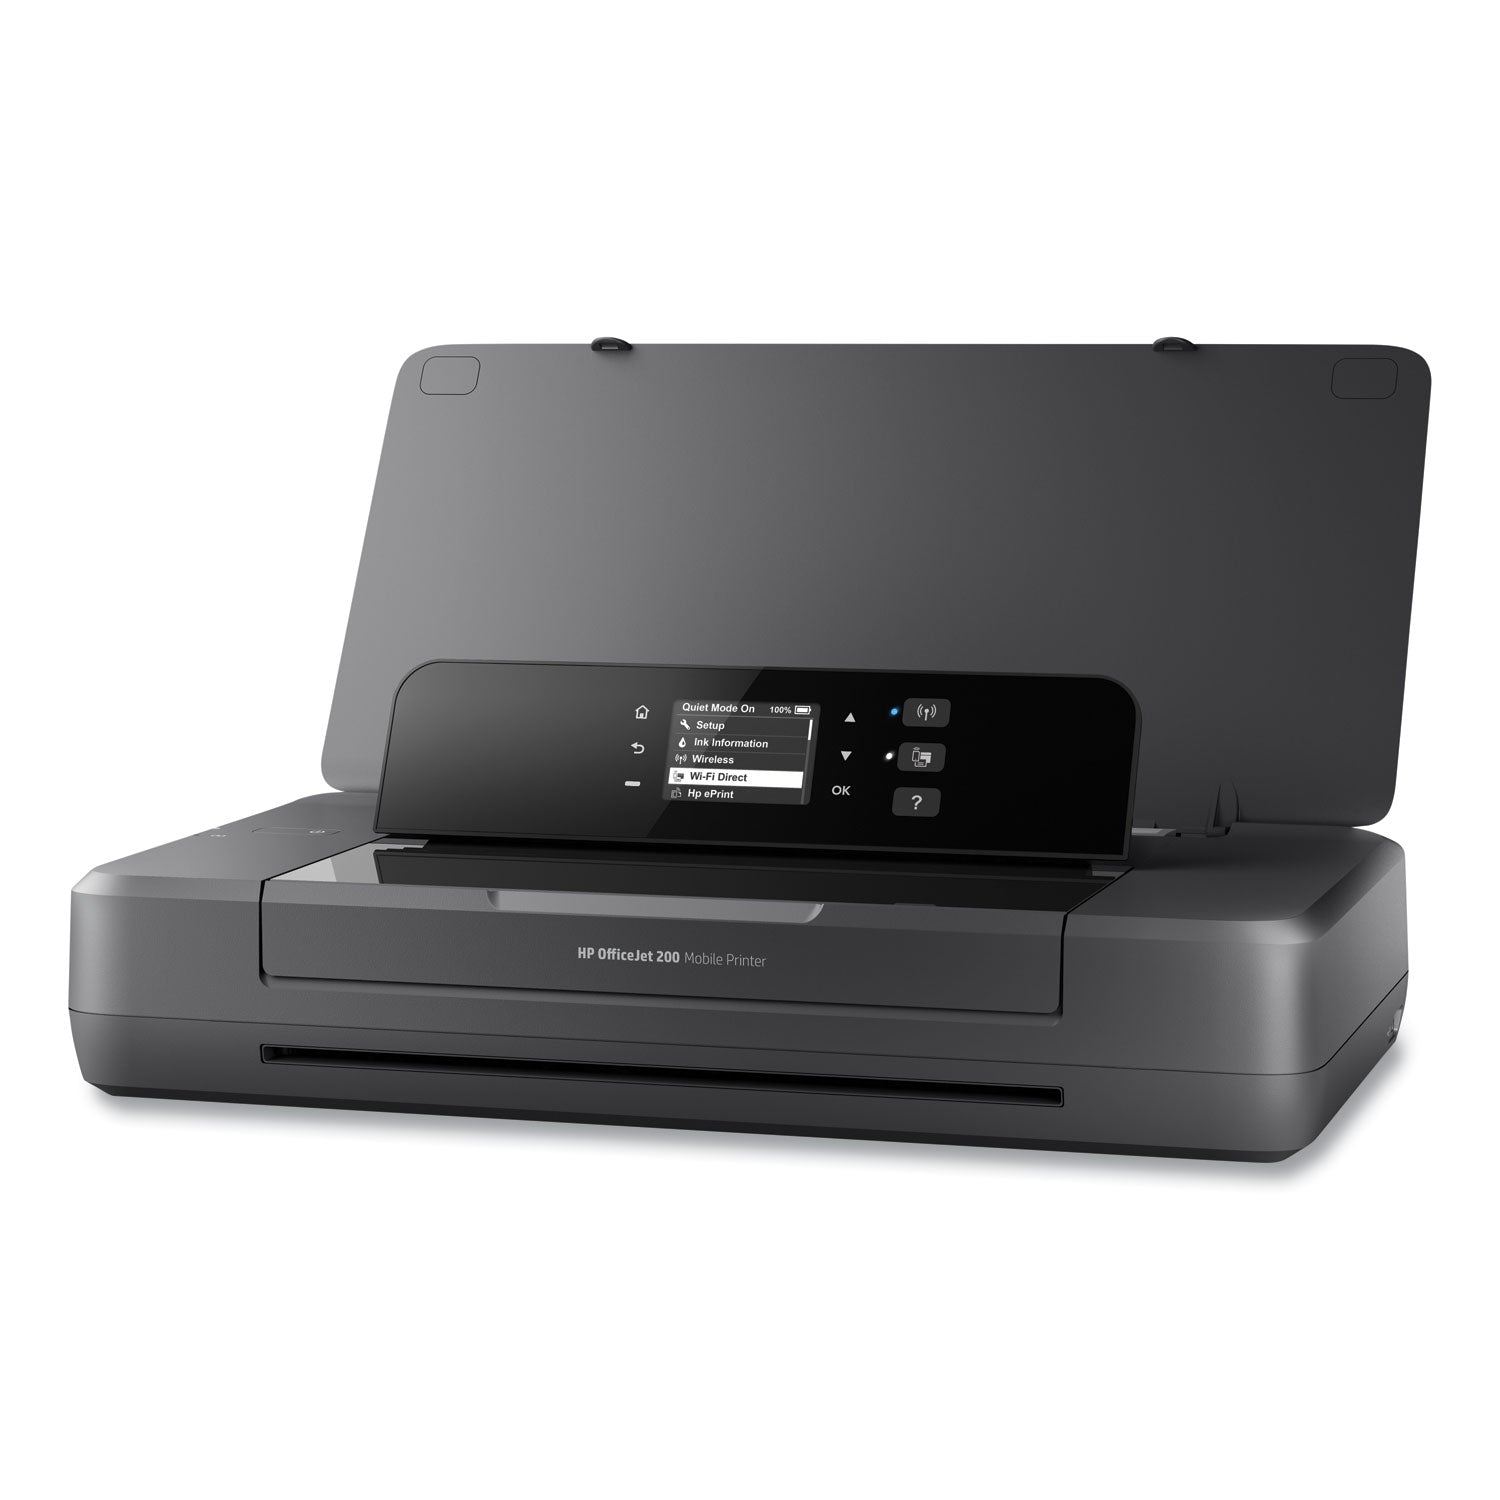 officejet-200-wireless-mobile-printer_hewcz993a - 4